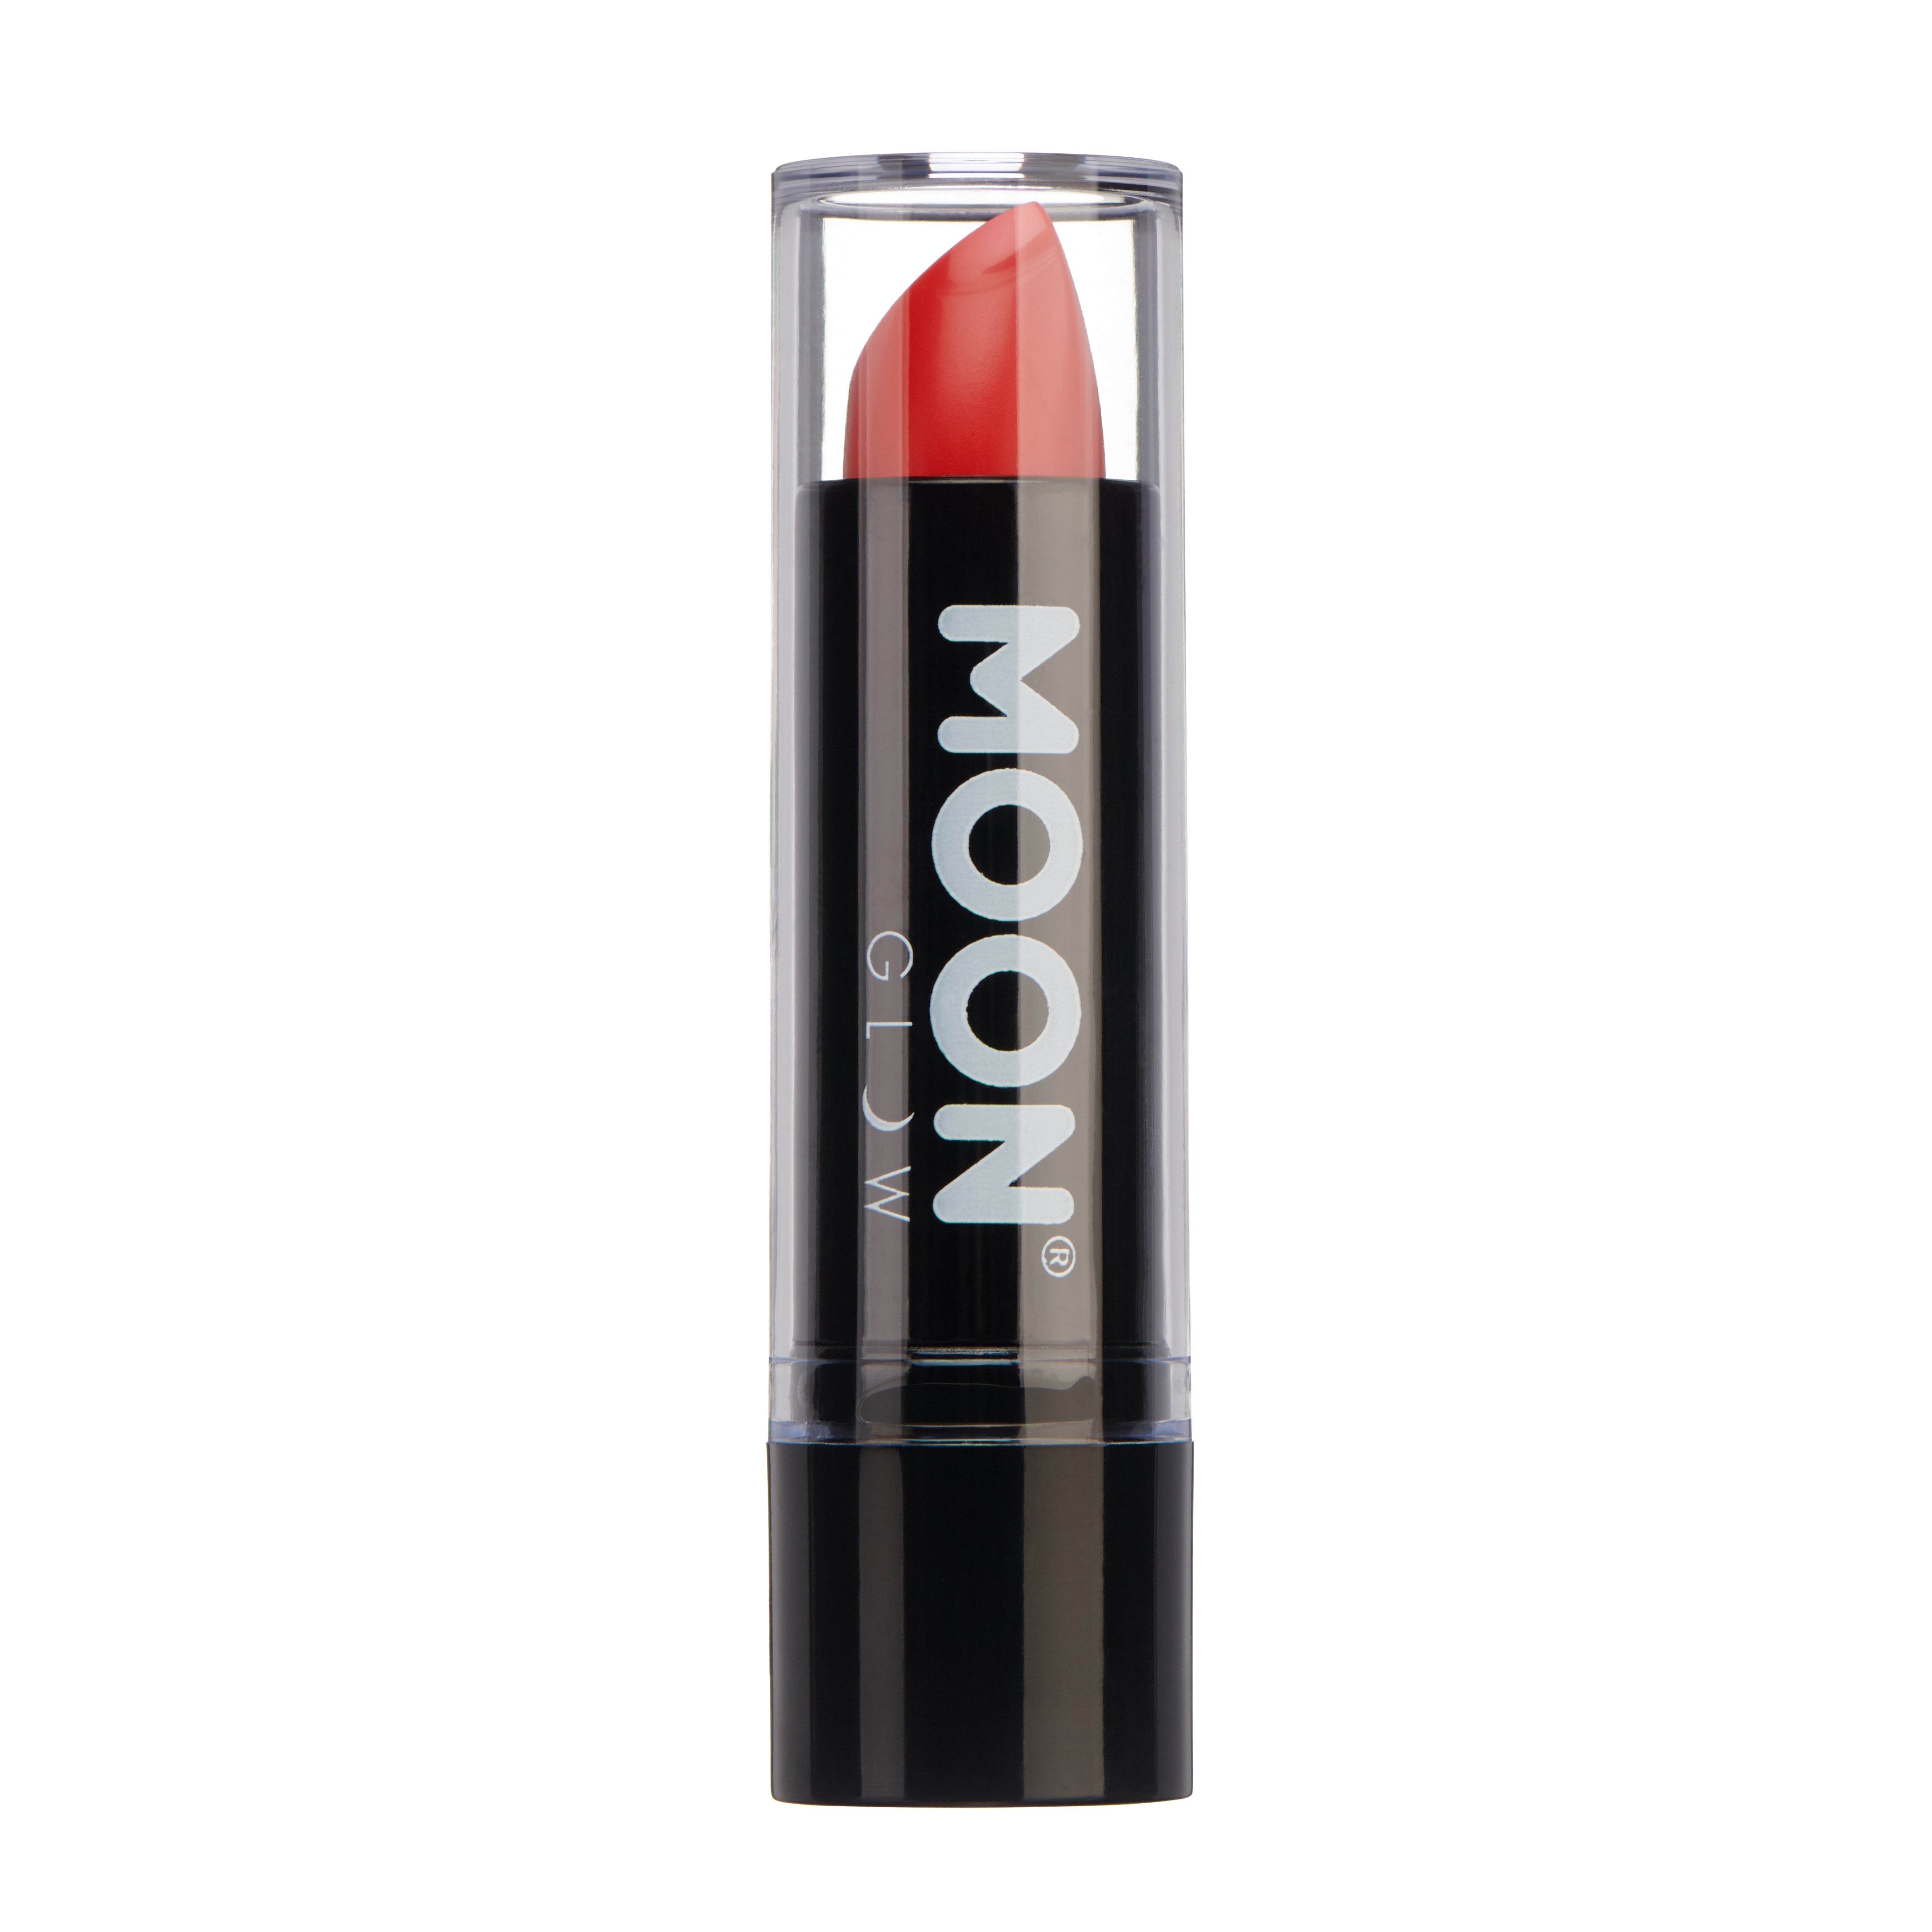 Intense Red - Neon UV Glow Blacklight Lipstick, 5g. Cosmetically certified, FDA & Health Canada compliant and cruelty free.